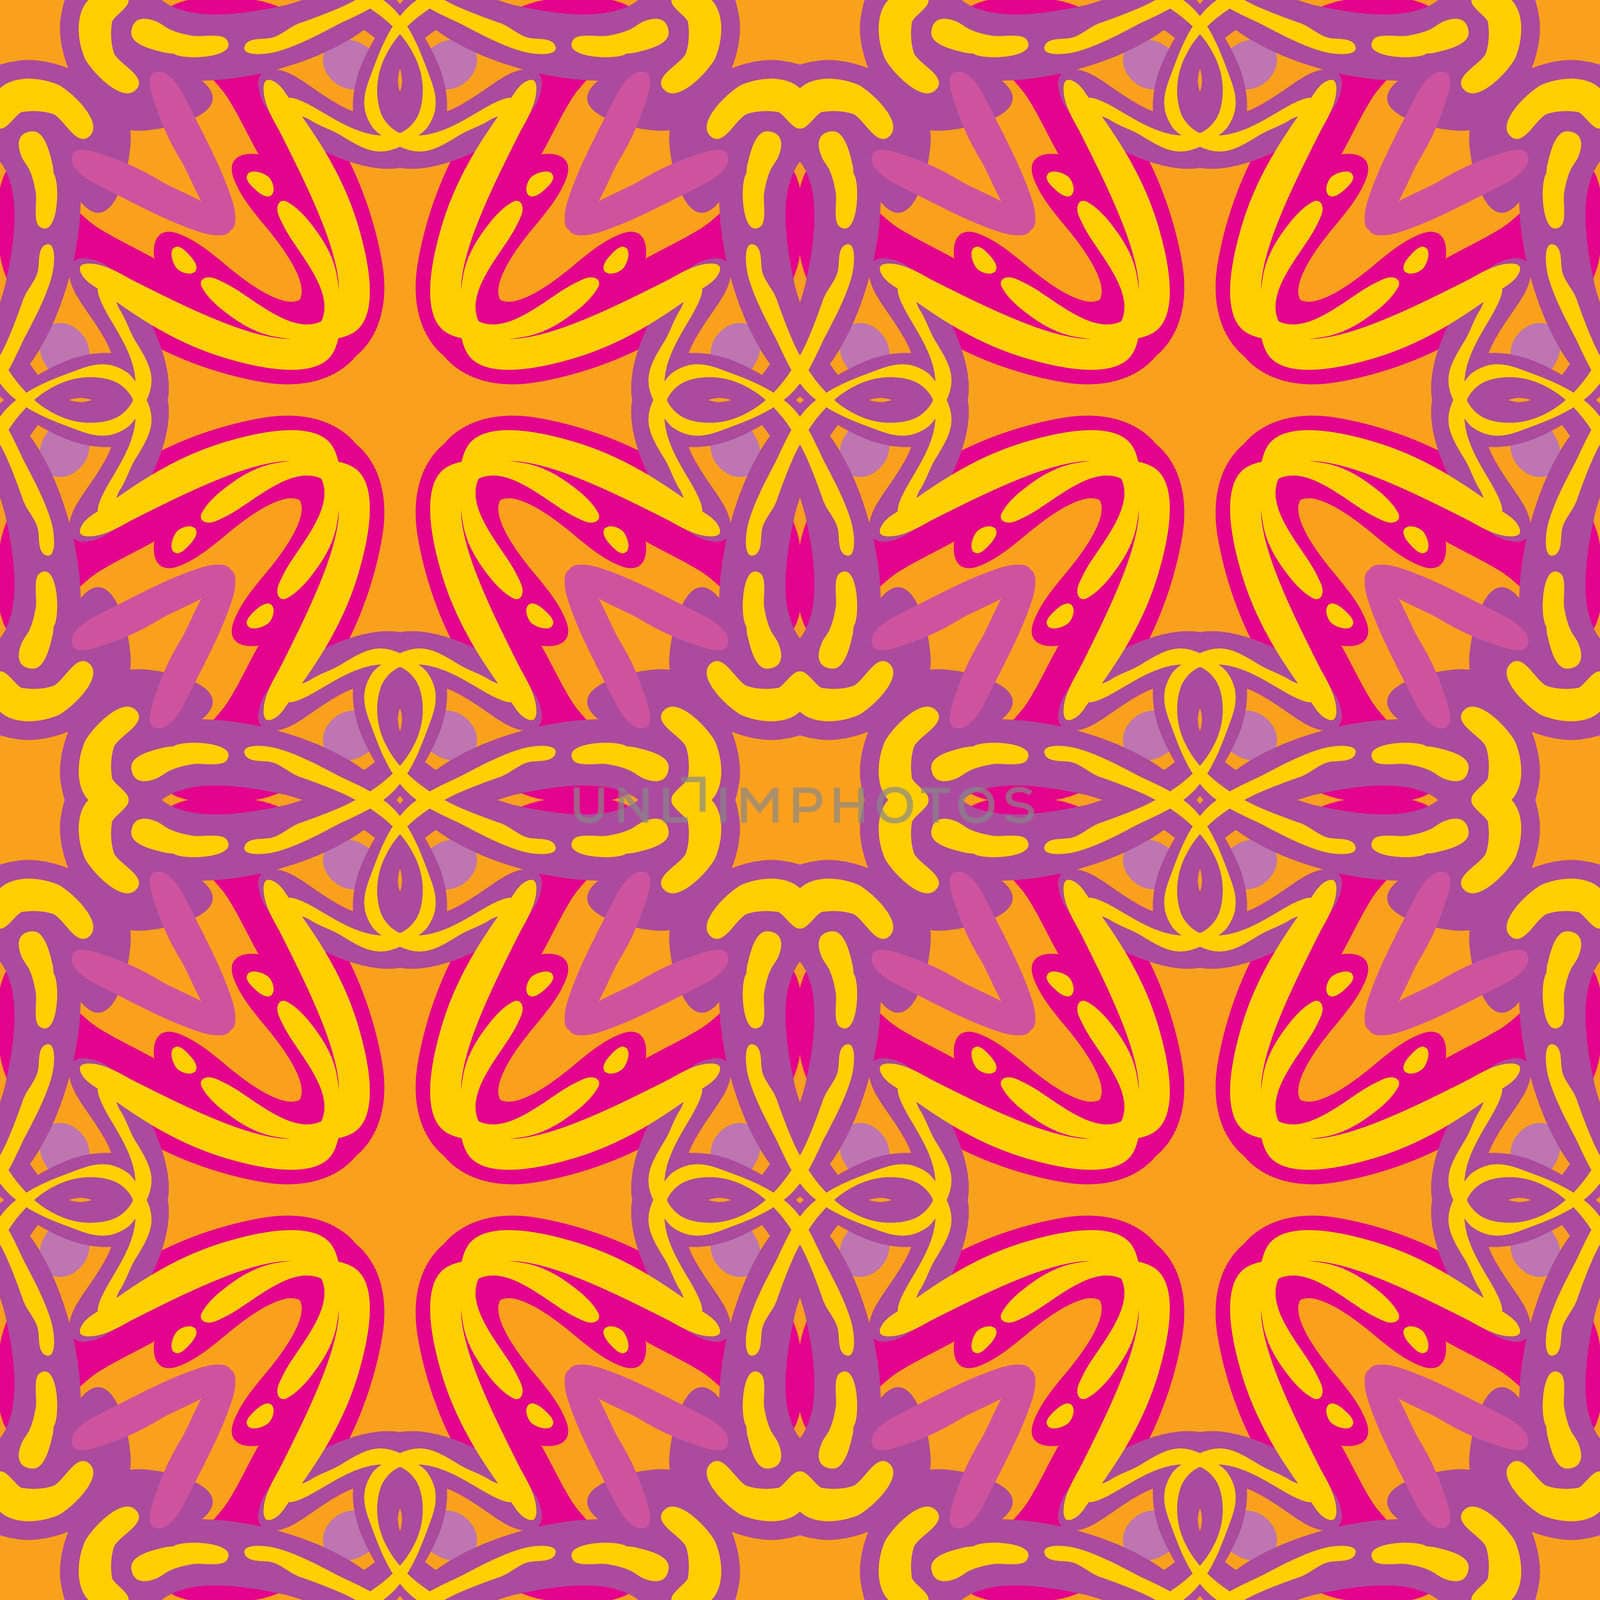 Cross symbols inside a seamless background pattern